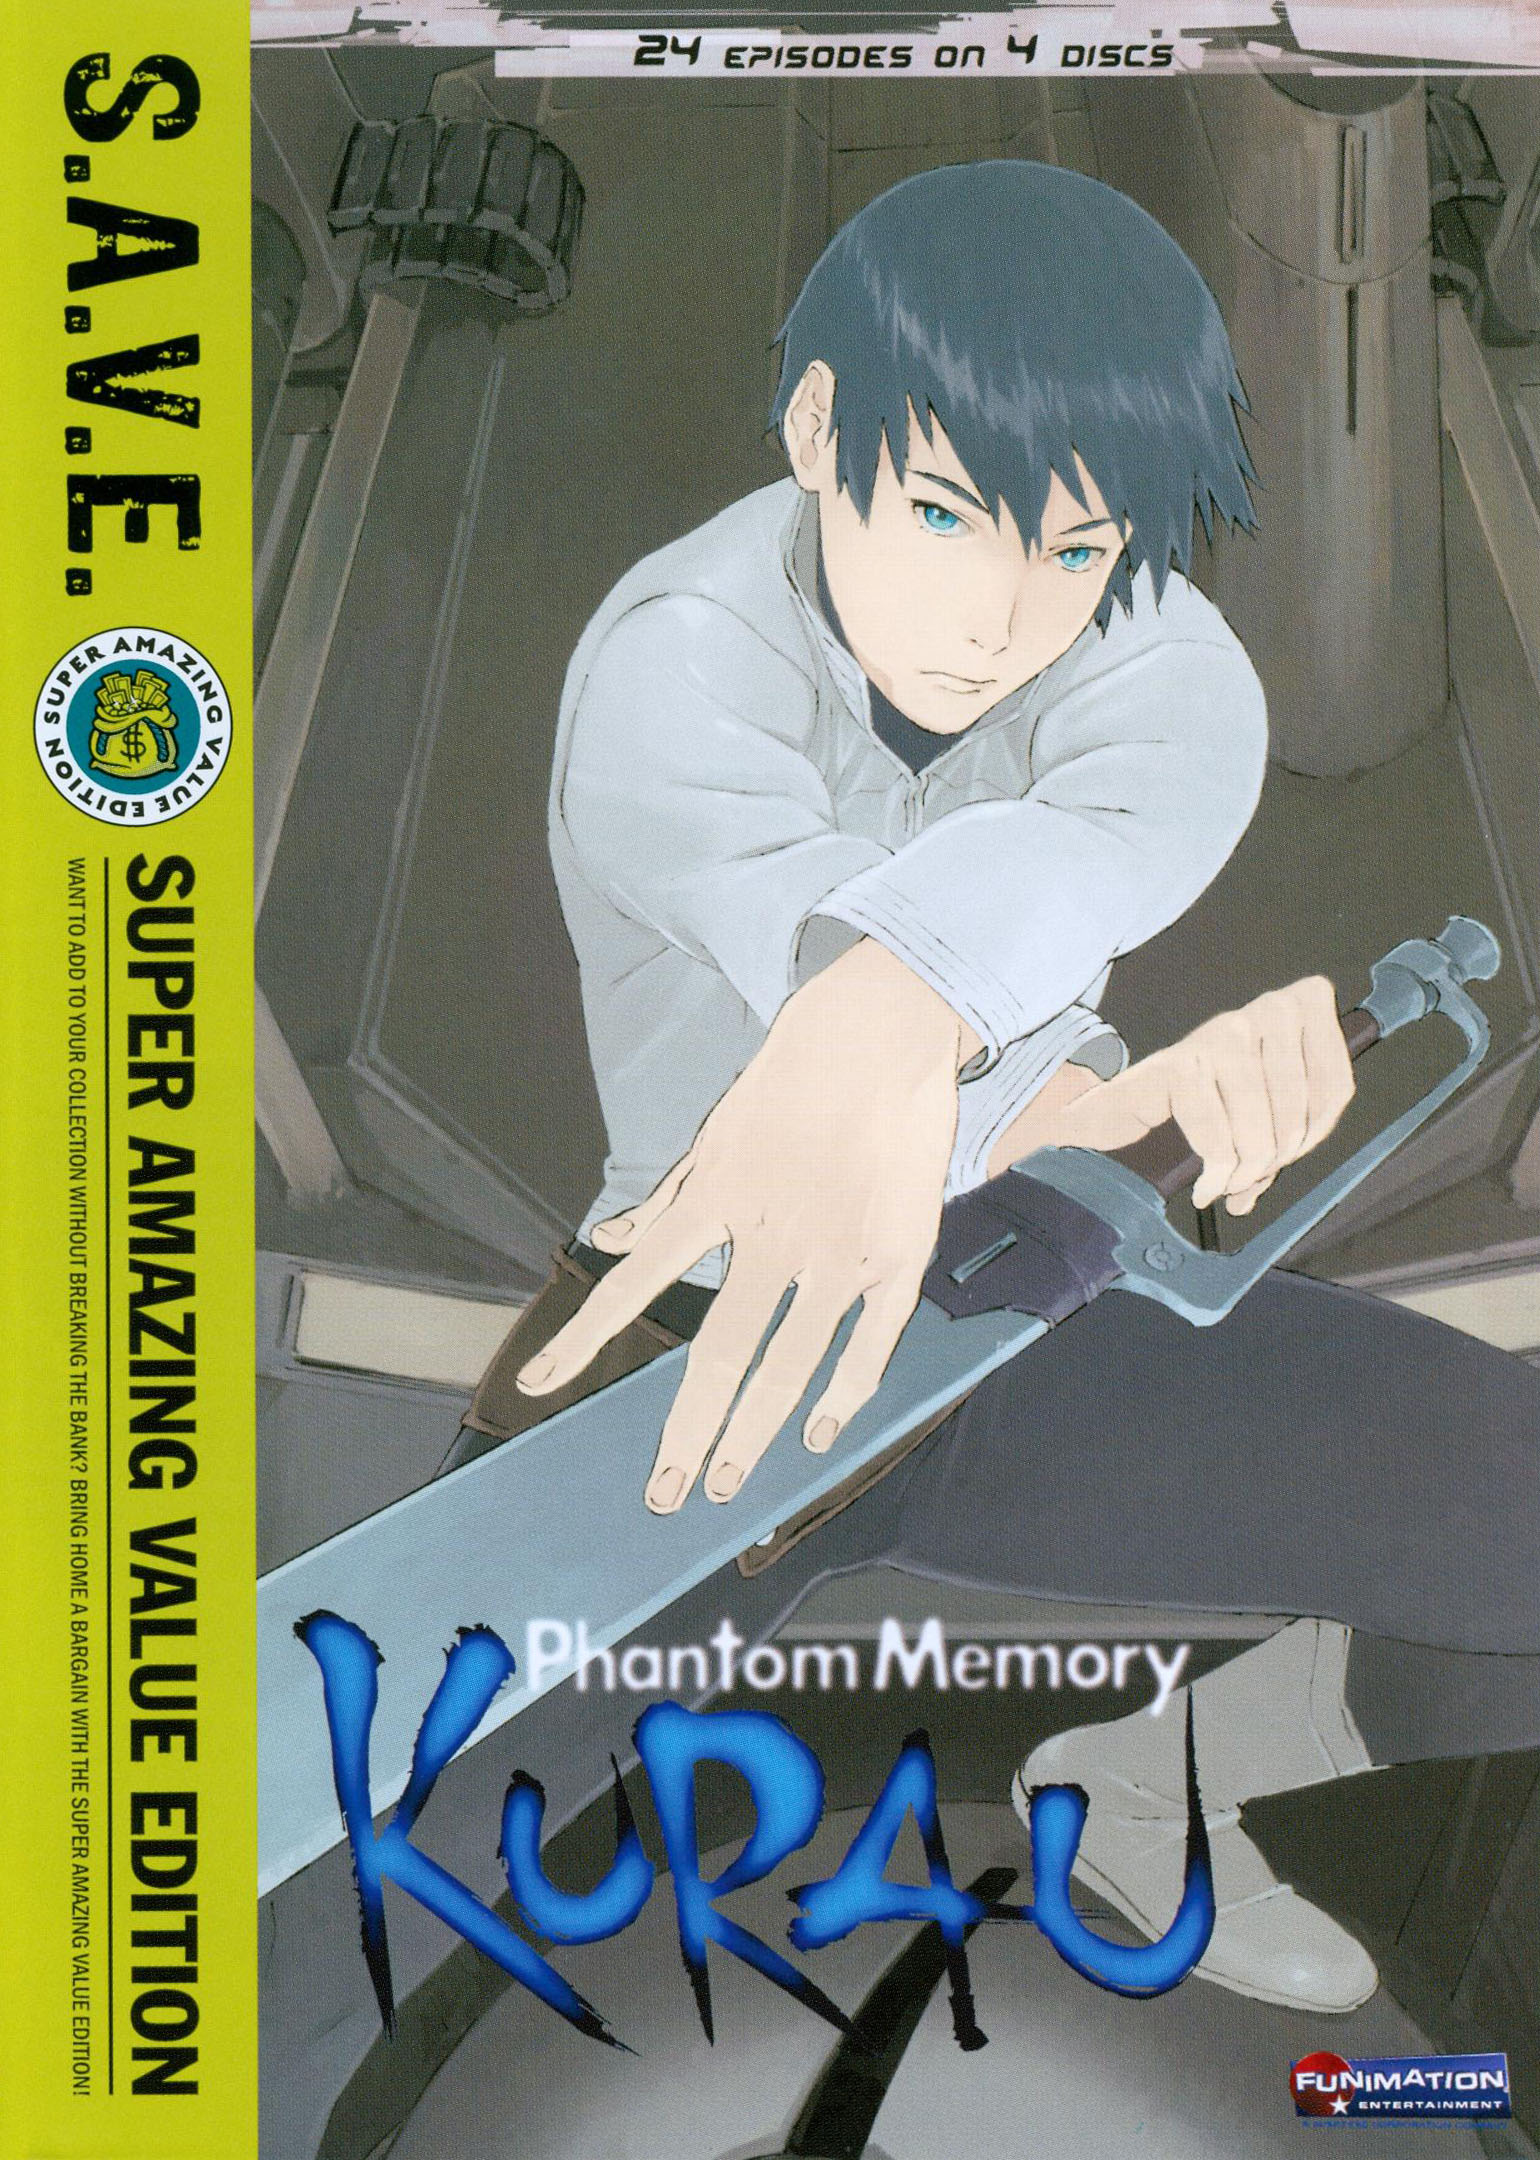 Kurau Phantom Memory: The Complete Series [4 Discs] [S.A.V.E.] [DVD] - Best  Buy